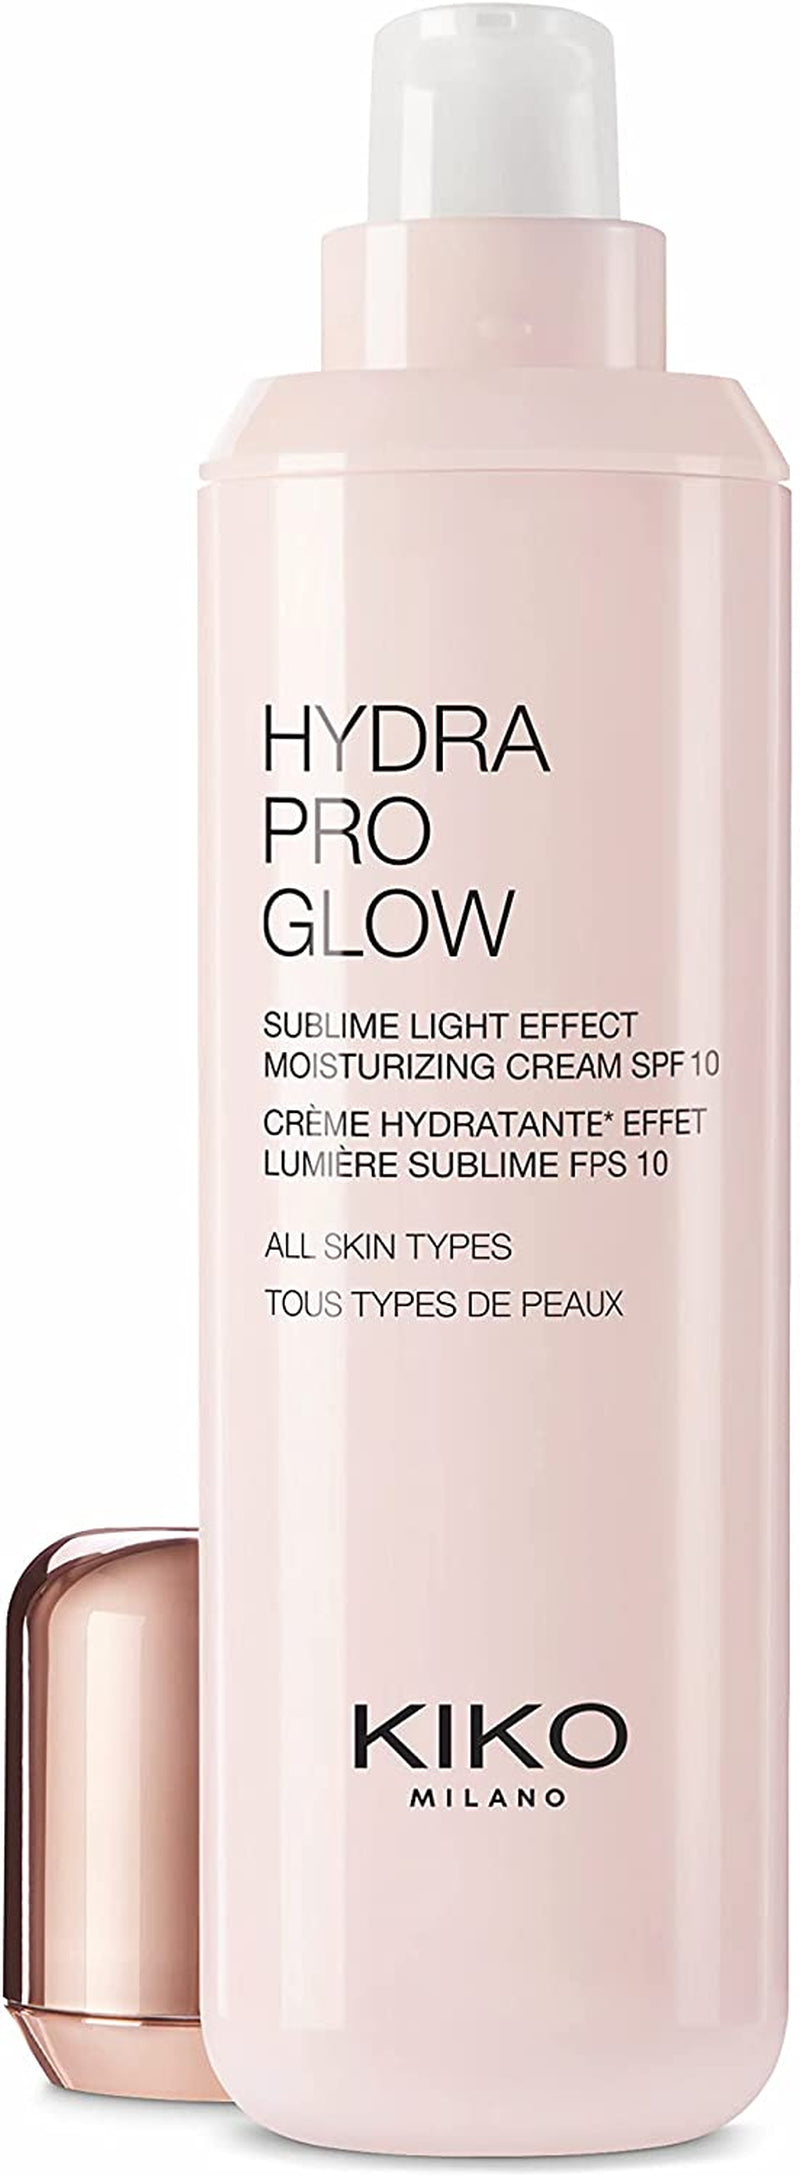 KIKO Milano Hydra Pro Glow | Brightening Moisturizing Cream with Hyaluronic Acid - Spf 10